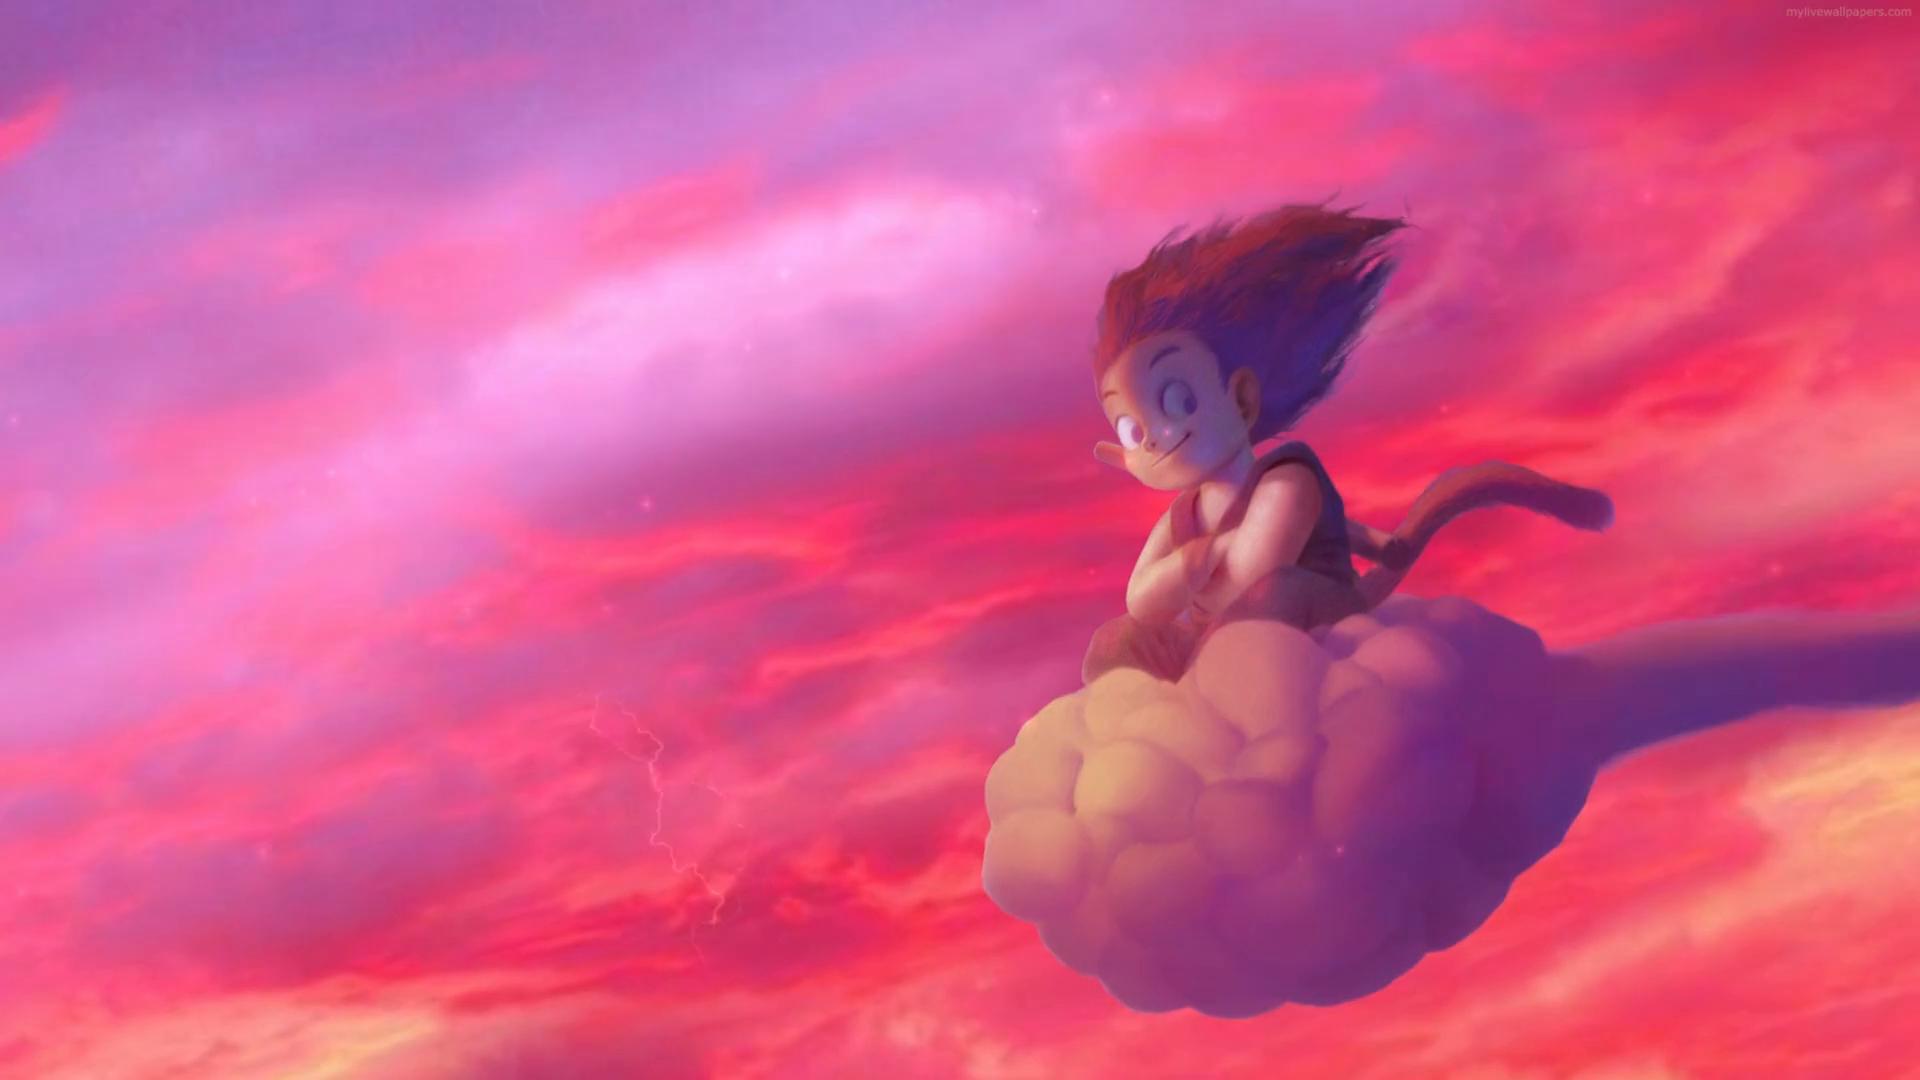 Goku on Nimbus wallpaper by notaproartist - Download on ZEDGE™ | 8815